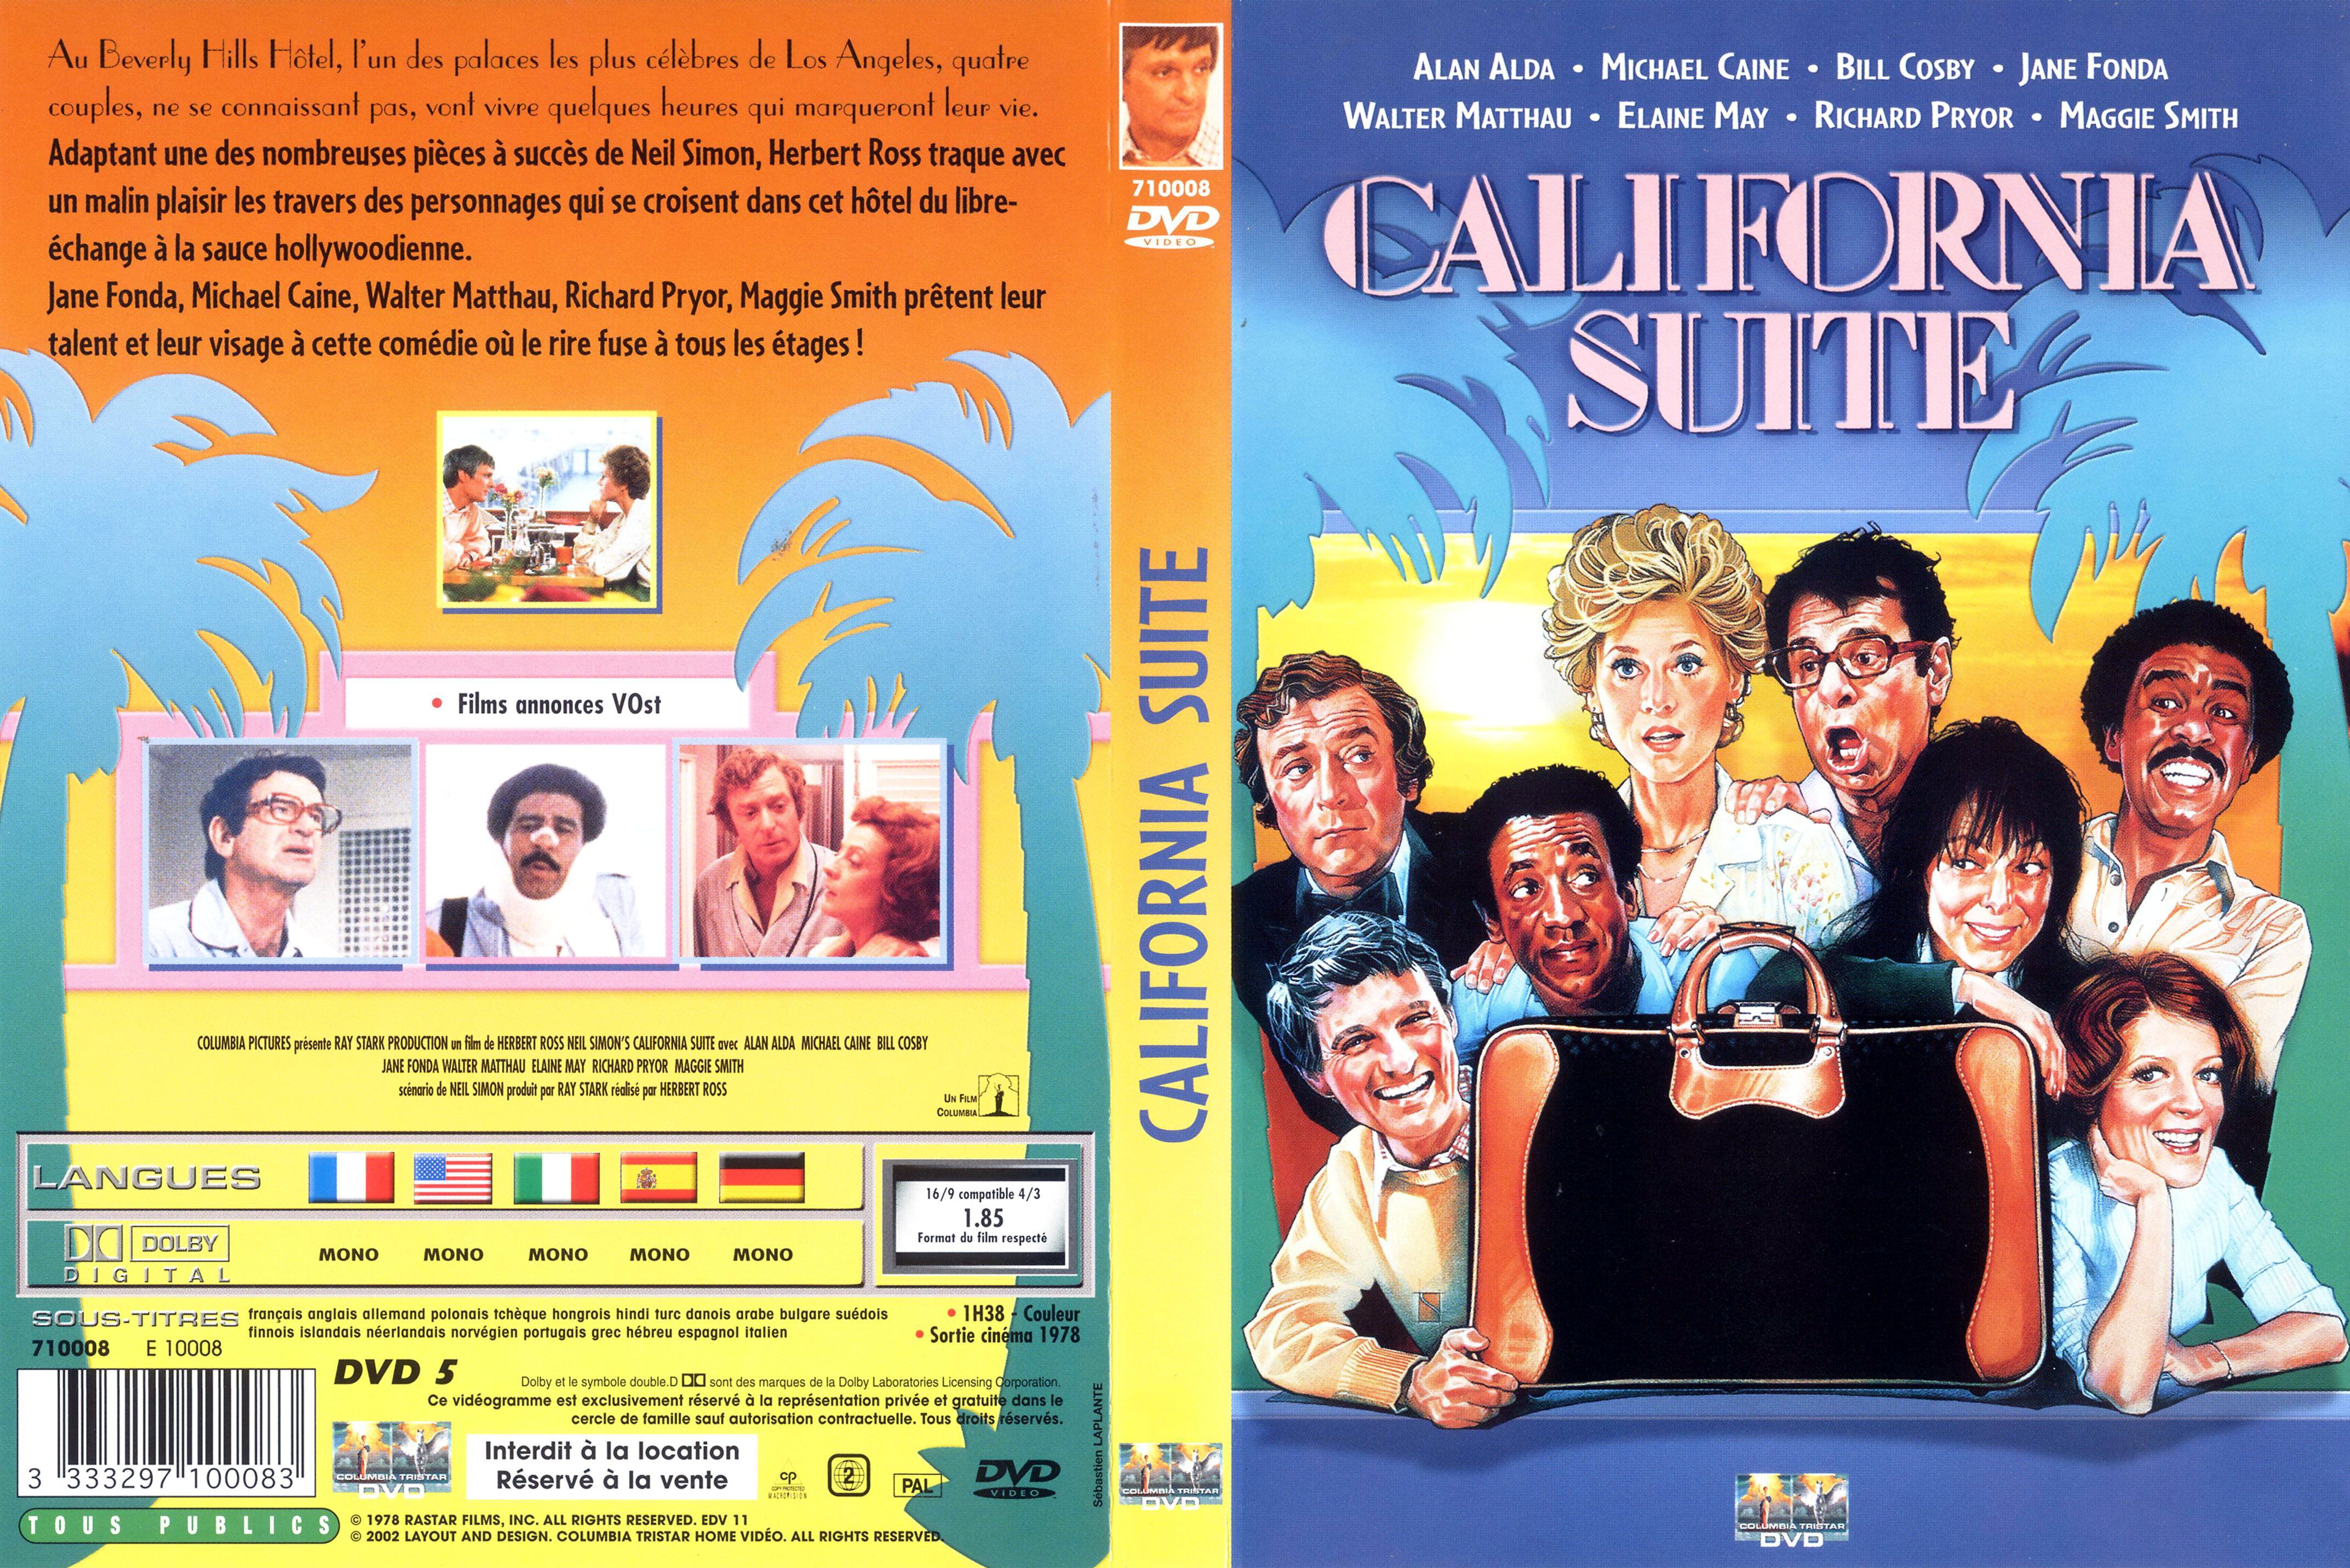 Jaquette DVD California suite v2